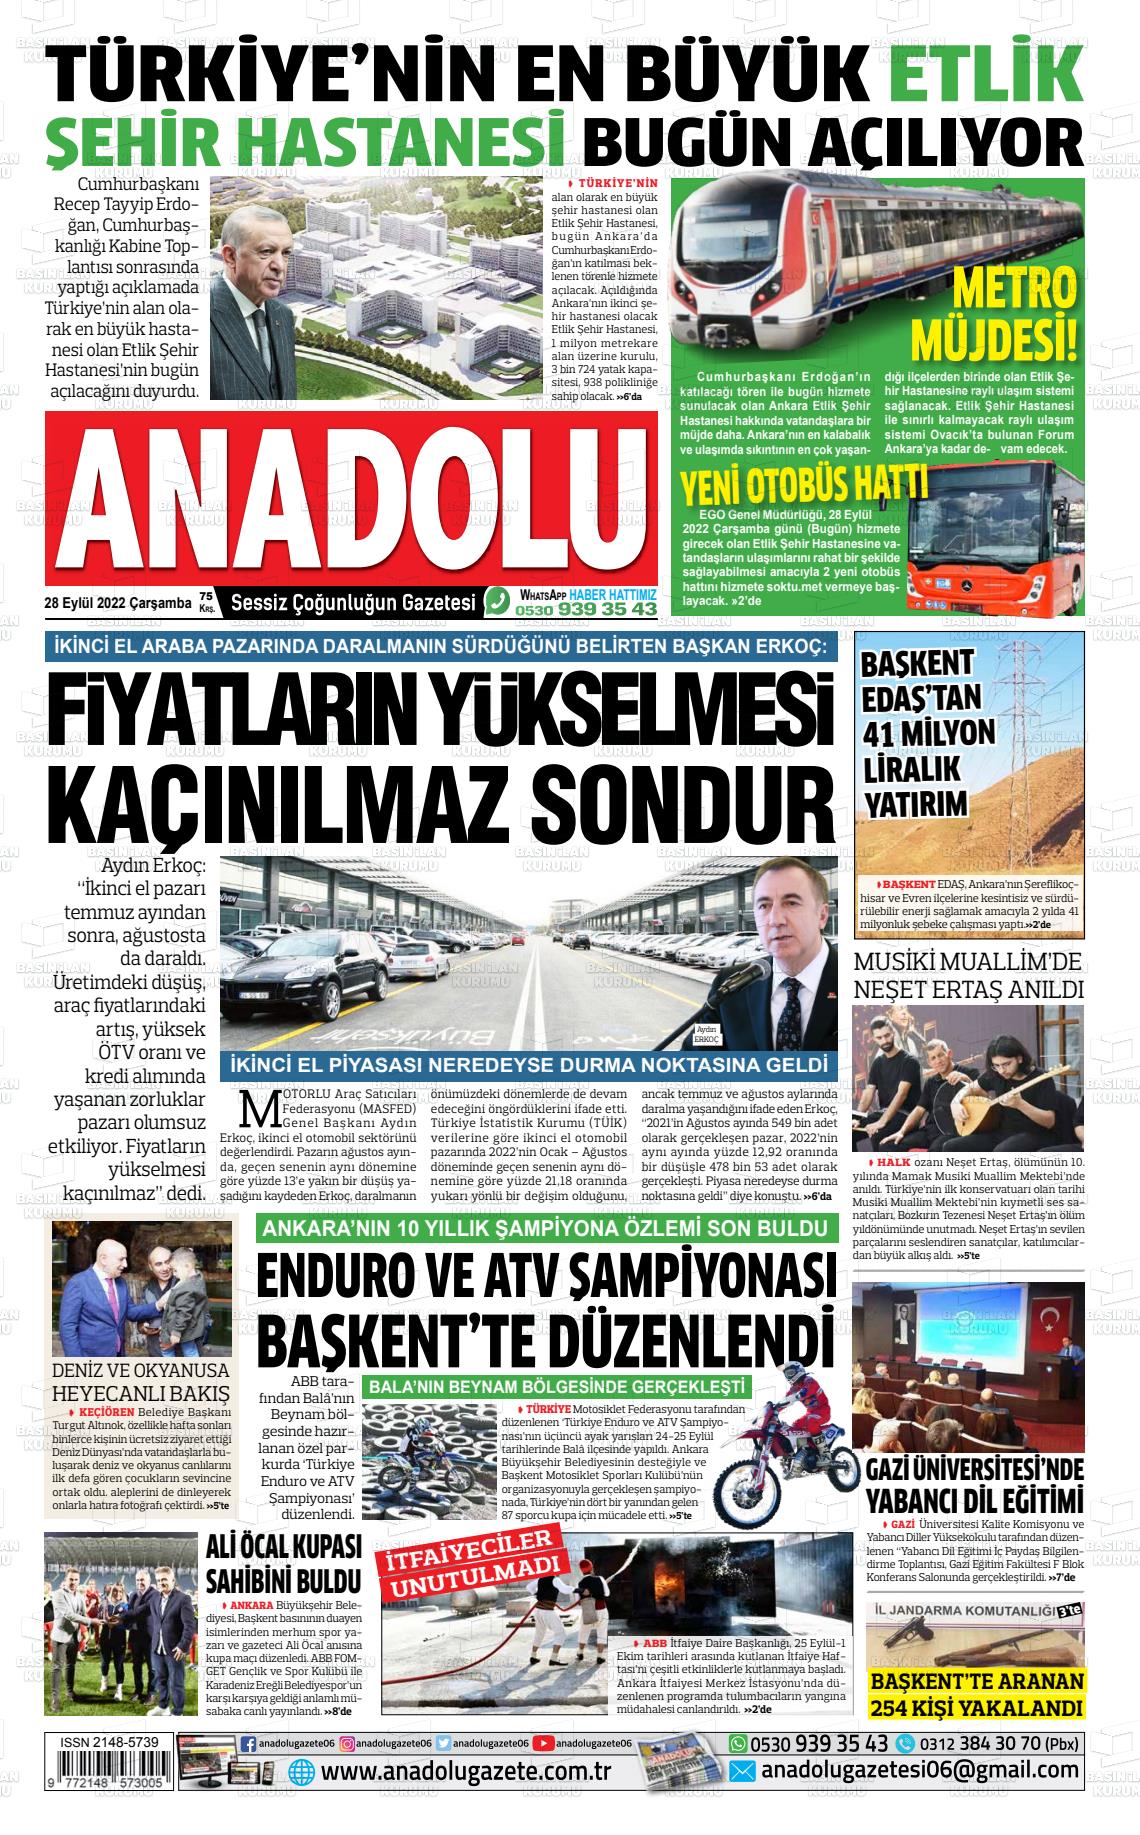 28 Eylül 2022 Ankara Anadolu Gazete Manşeti